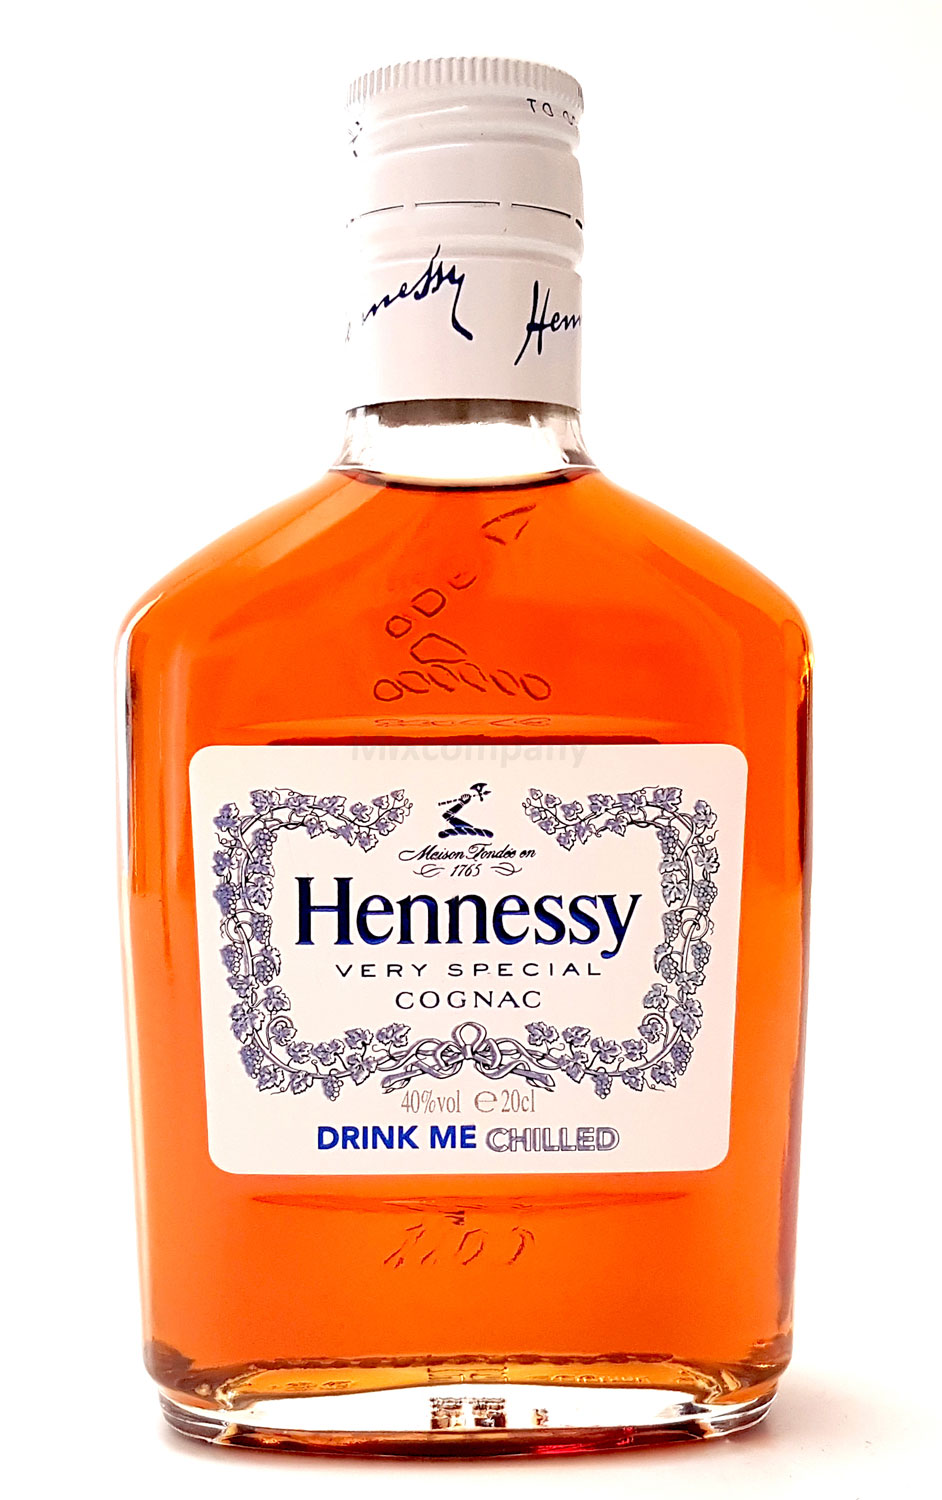 Hennessy Very Special Cognac 20cl (40% Vol)